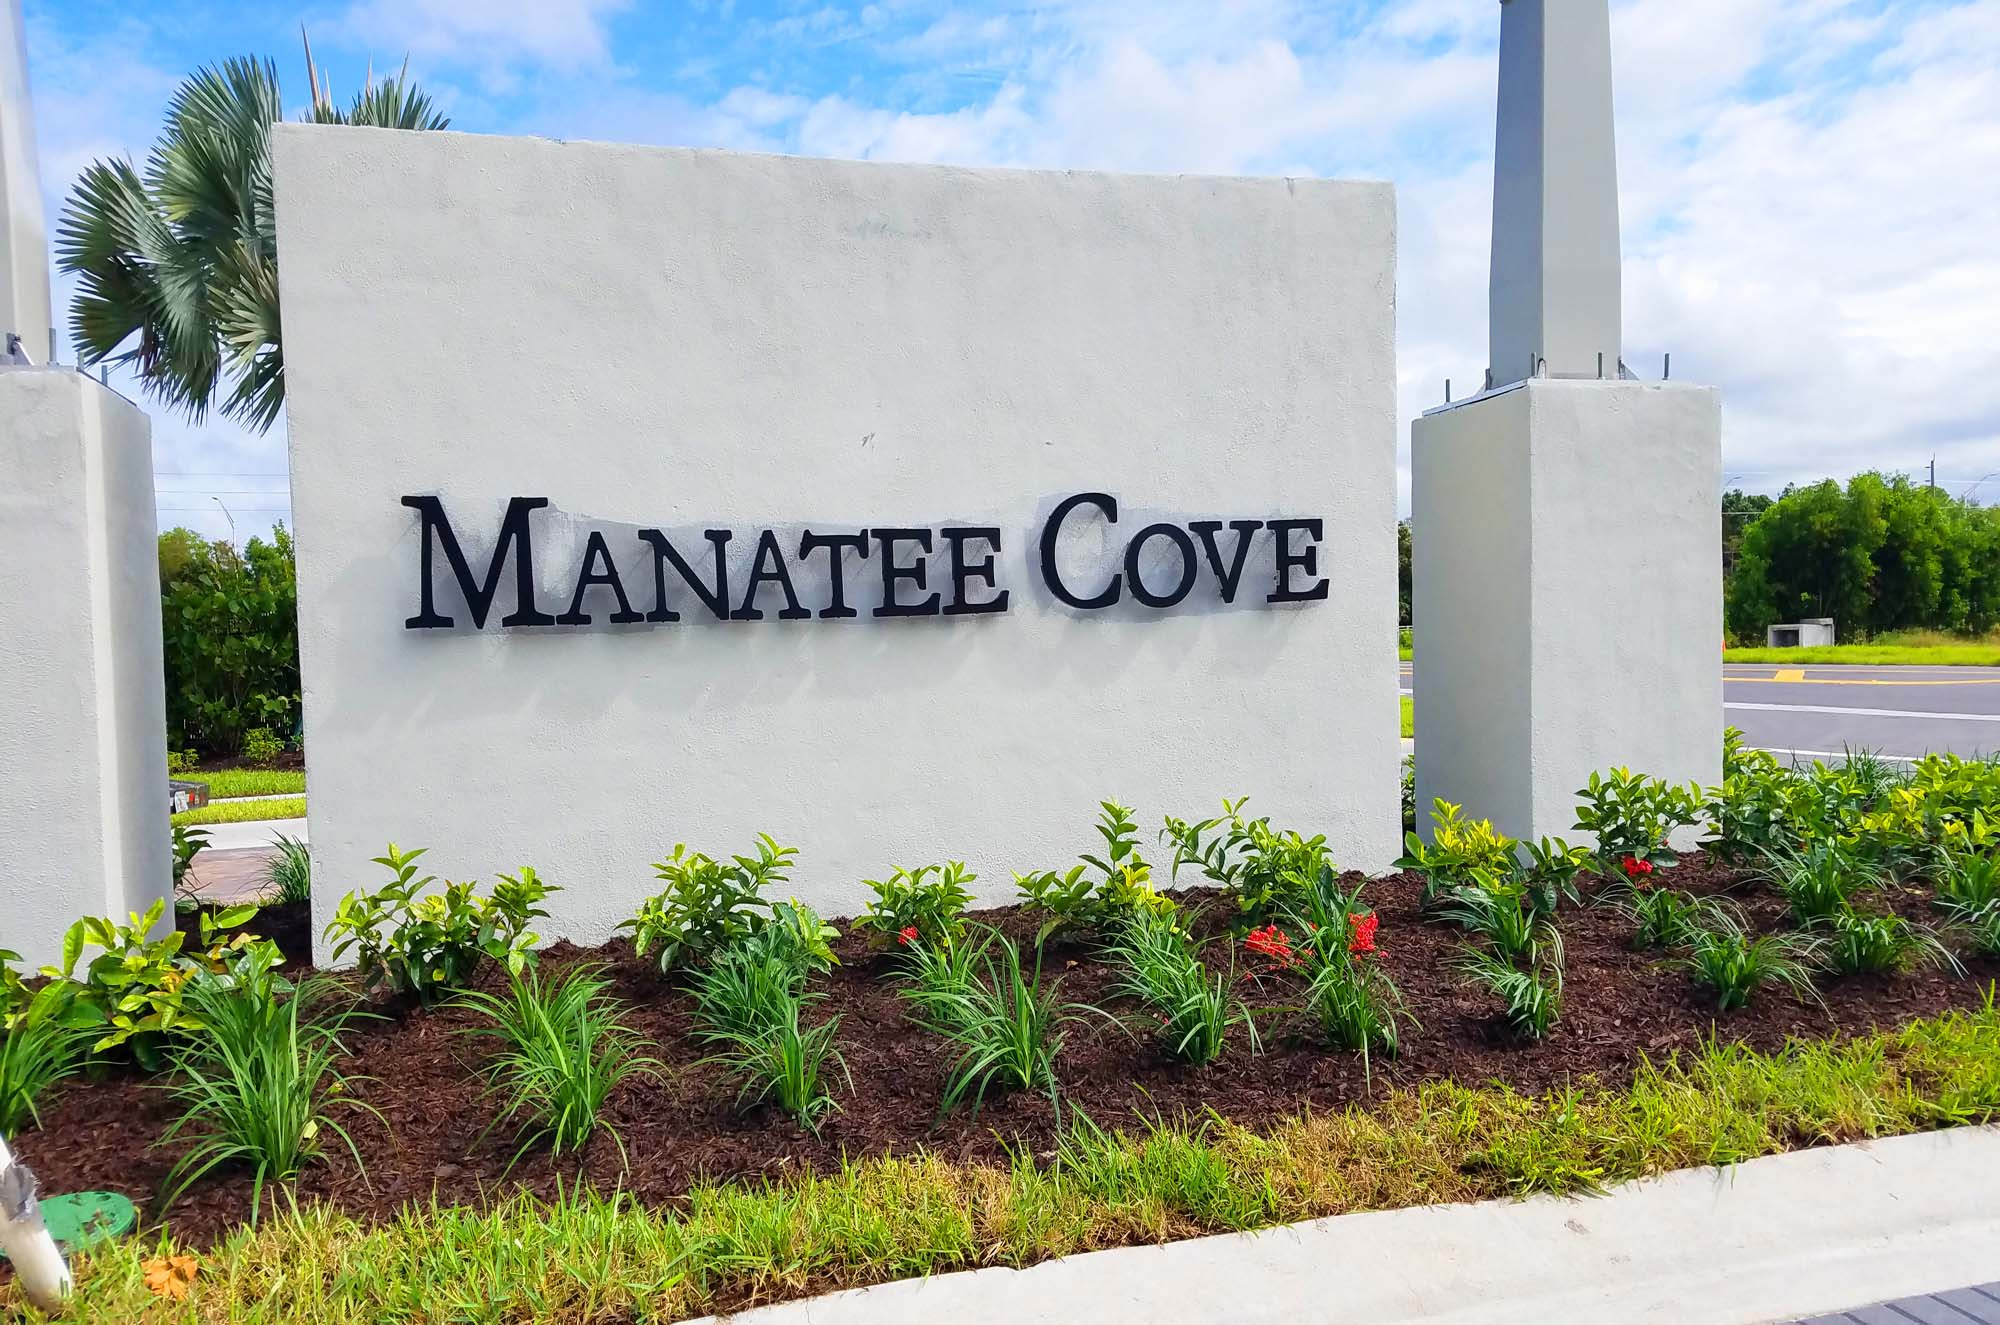 New Community of Manatee Cove